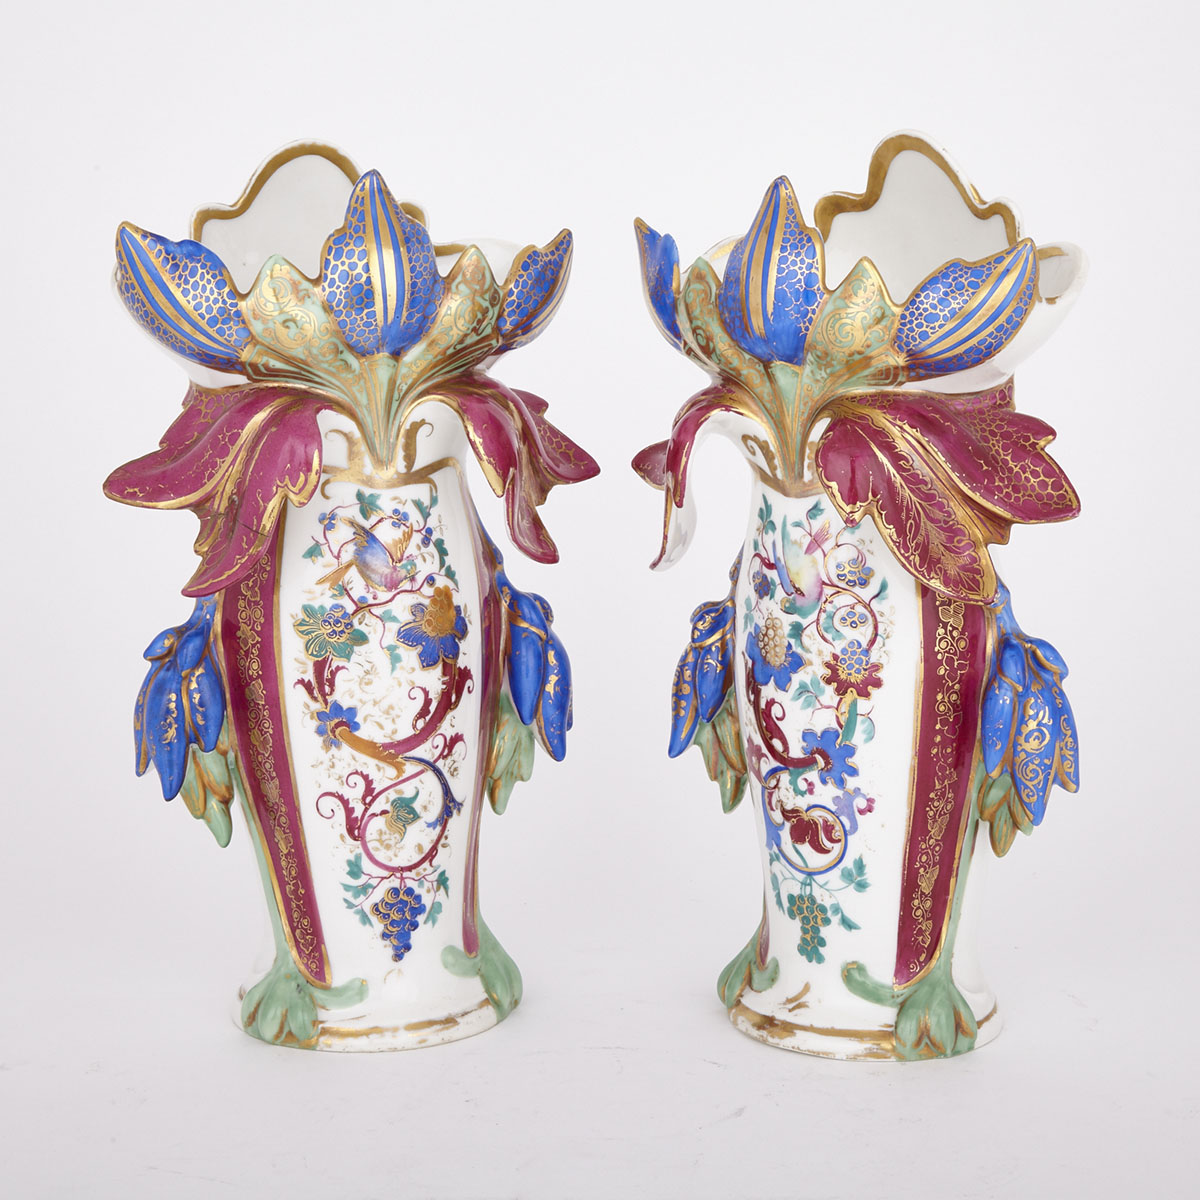 Pair of Paris Porcelain Mantel Vases, 19th century